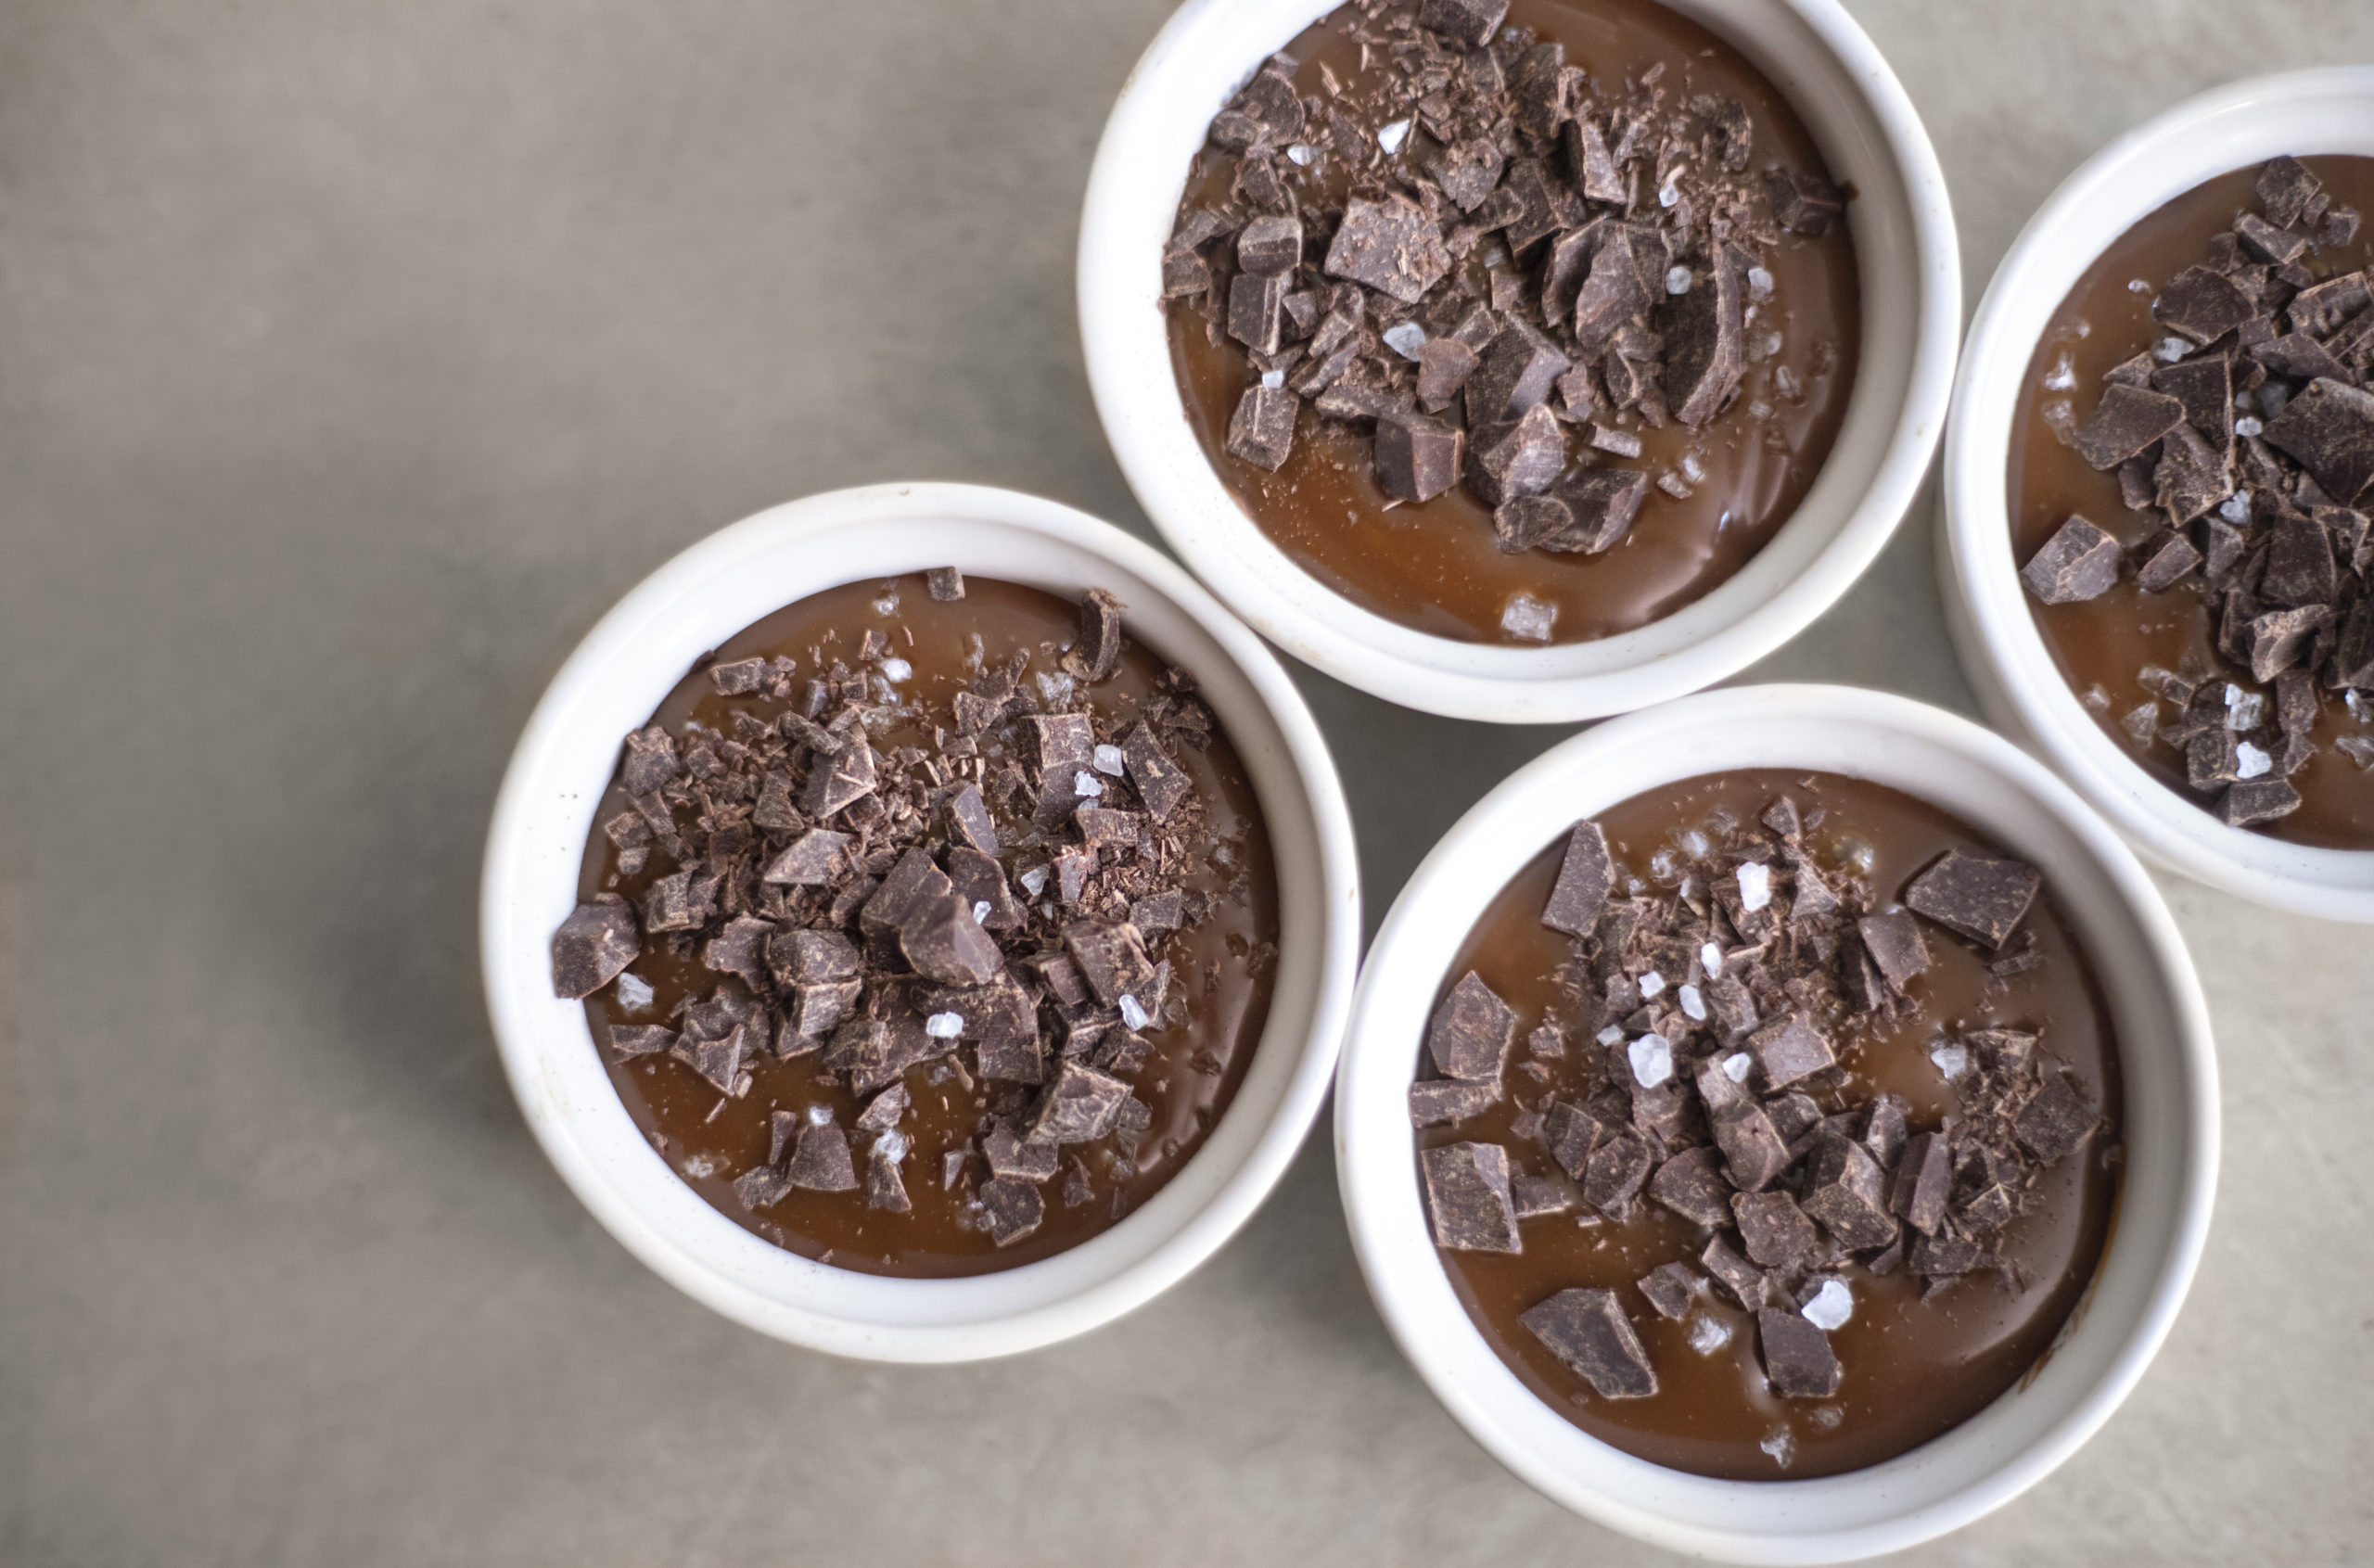 Jessica Craig's chocolate pudding.